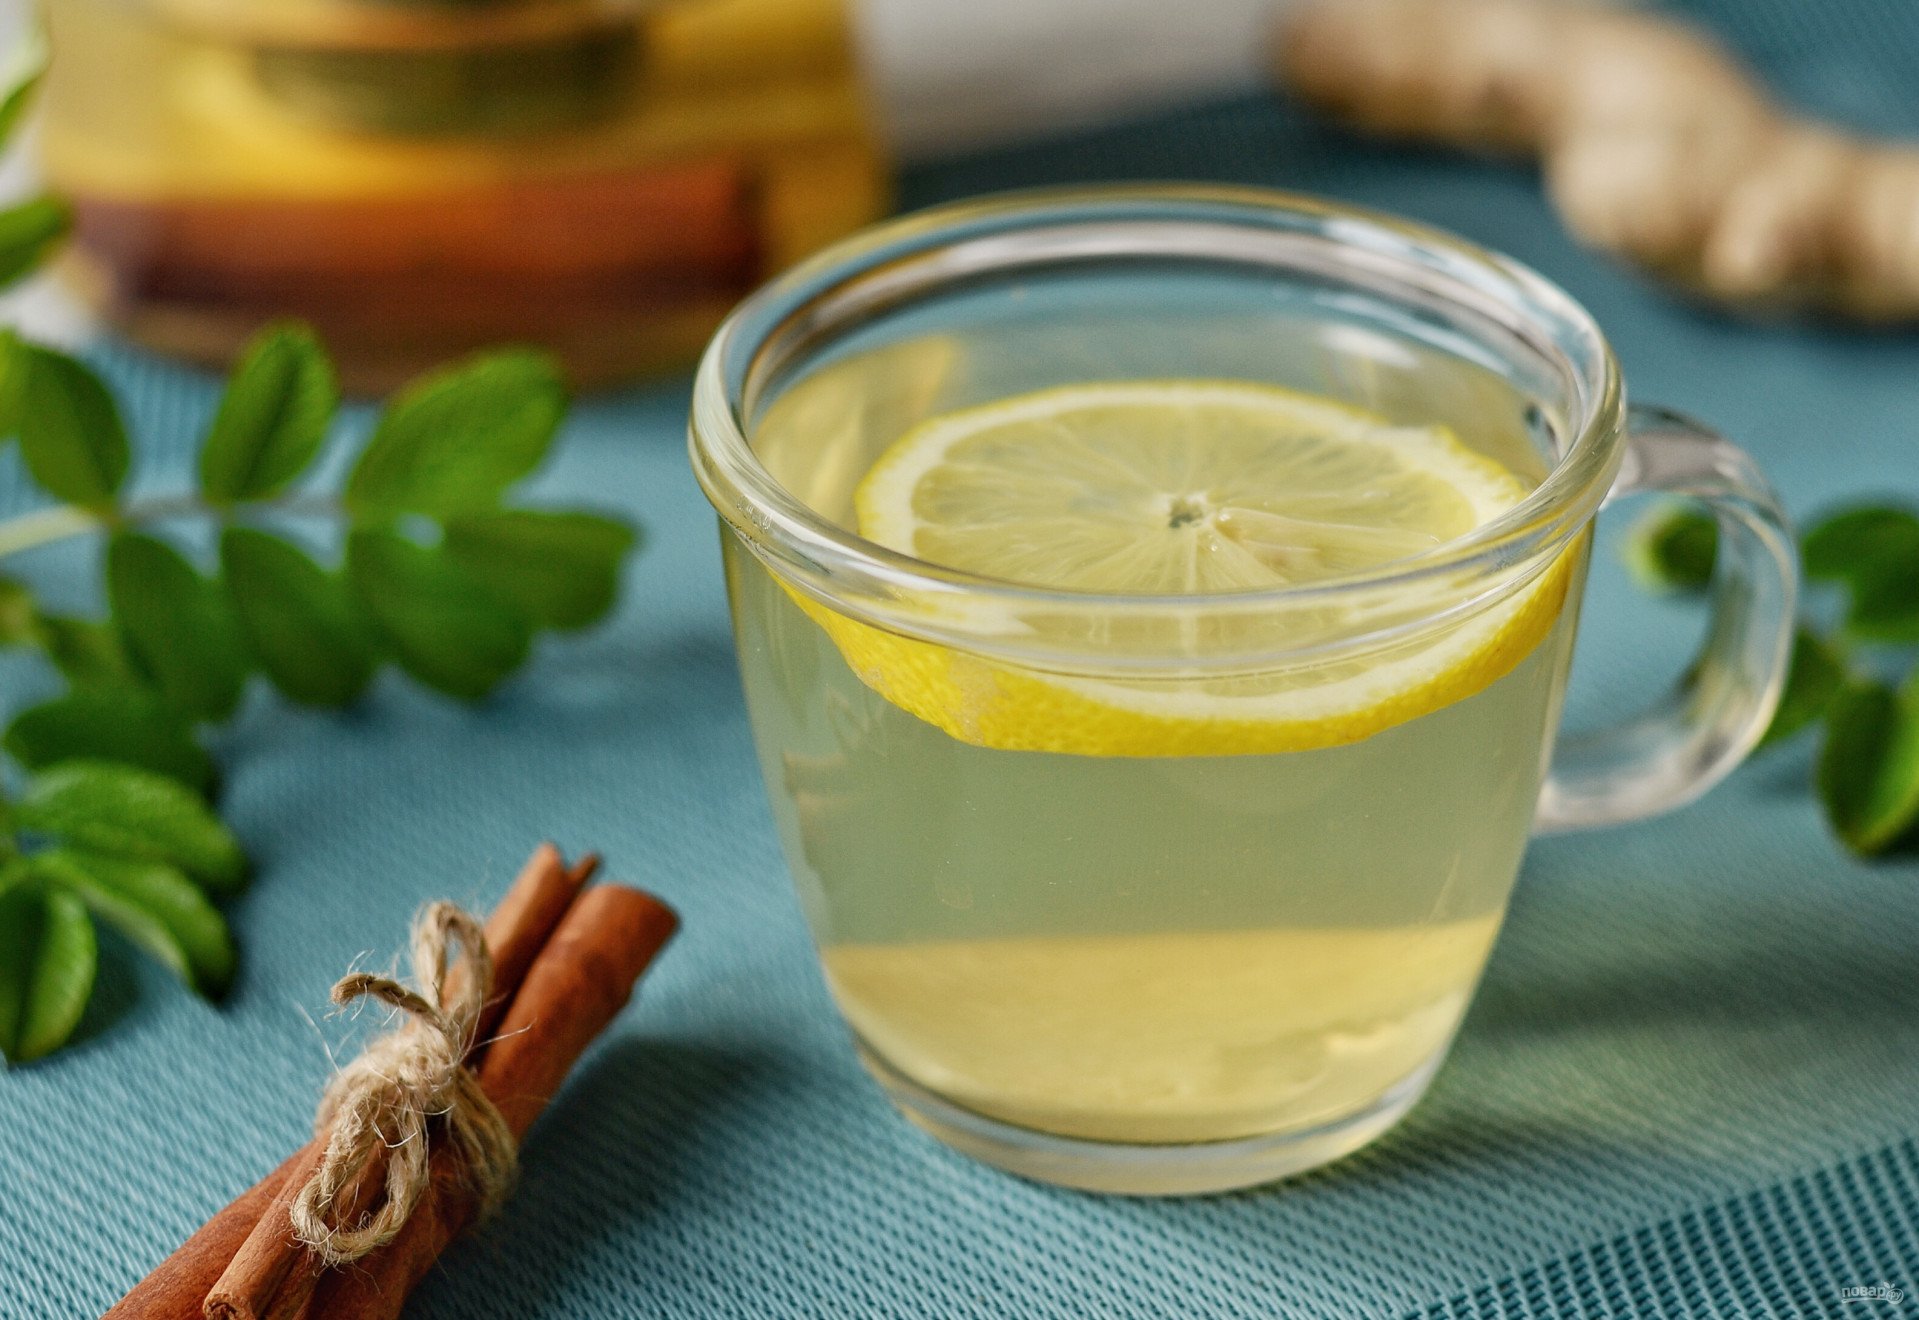 Сок лимона вода корица сода. Зеленый чай. Имбирный чай. Зеленый чай с лимоном. Чай с лимоном и имбирем.